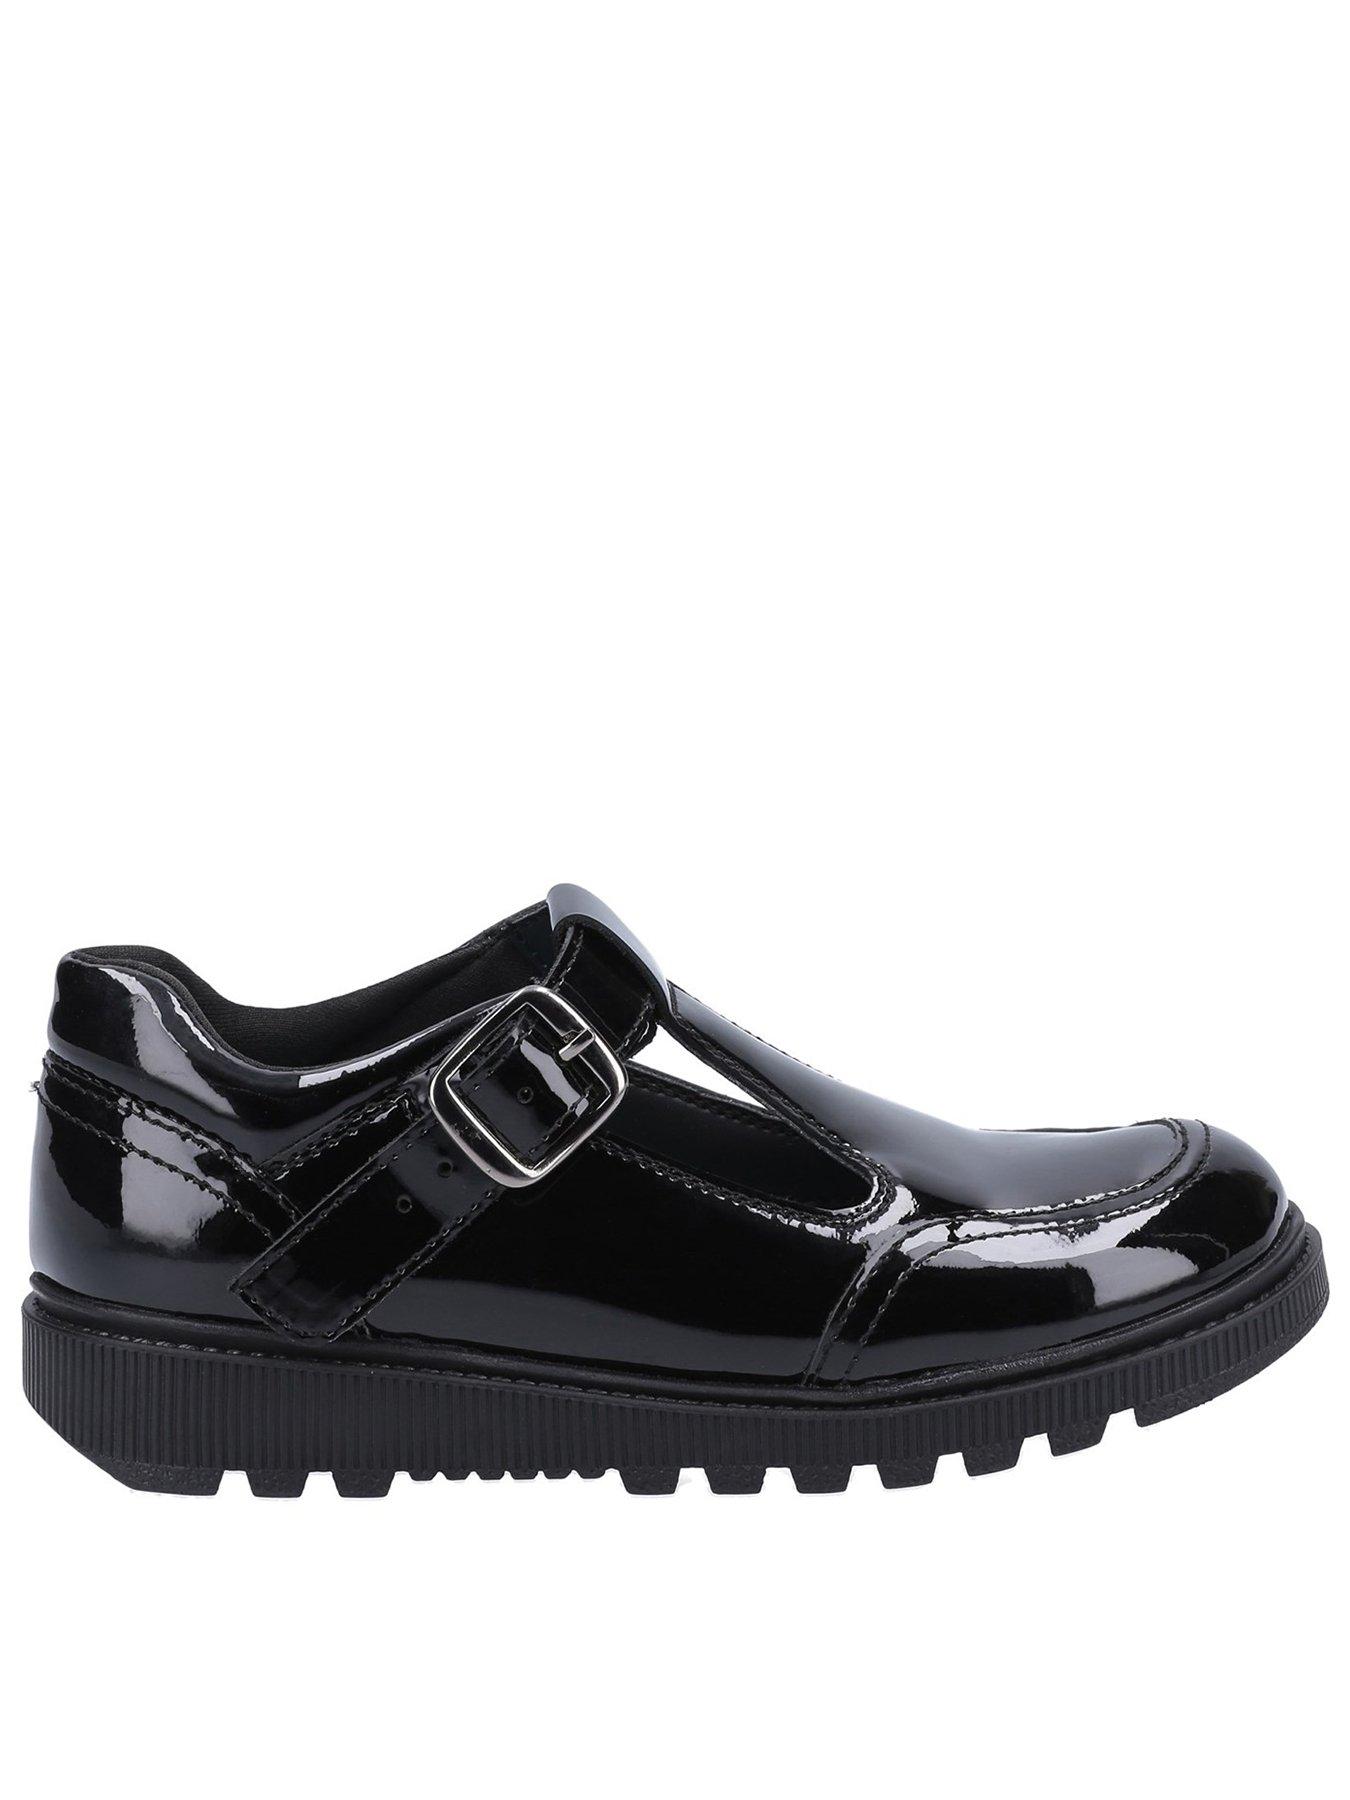  Kerry Junior Patent School Shoes - Black